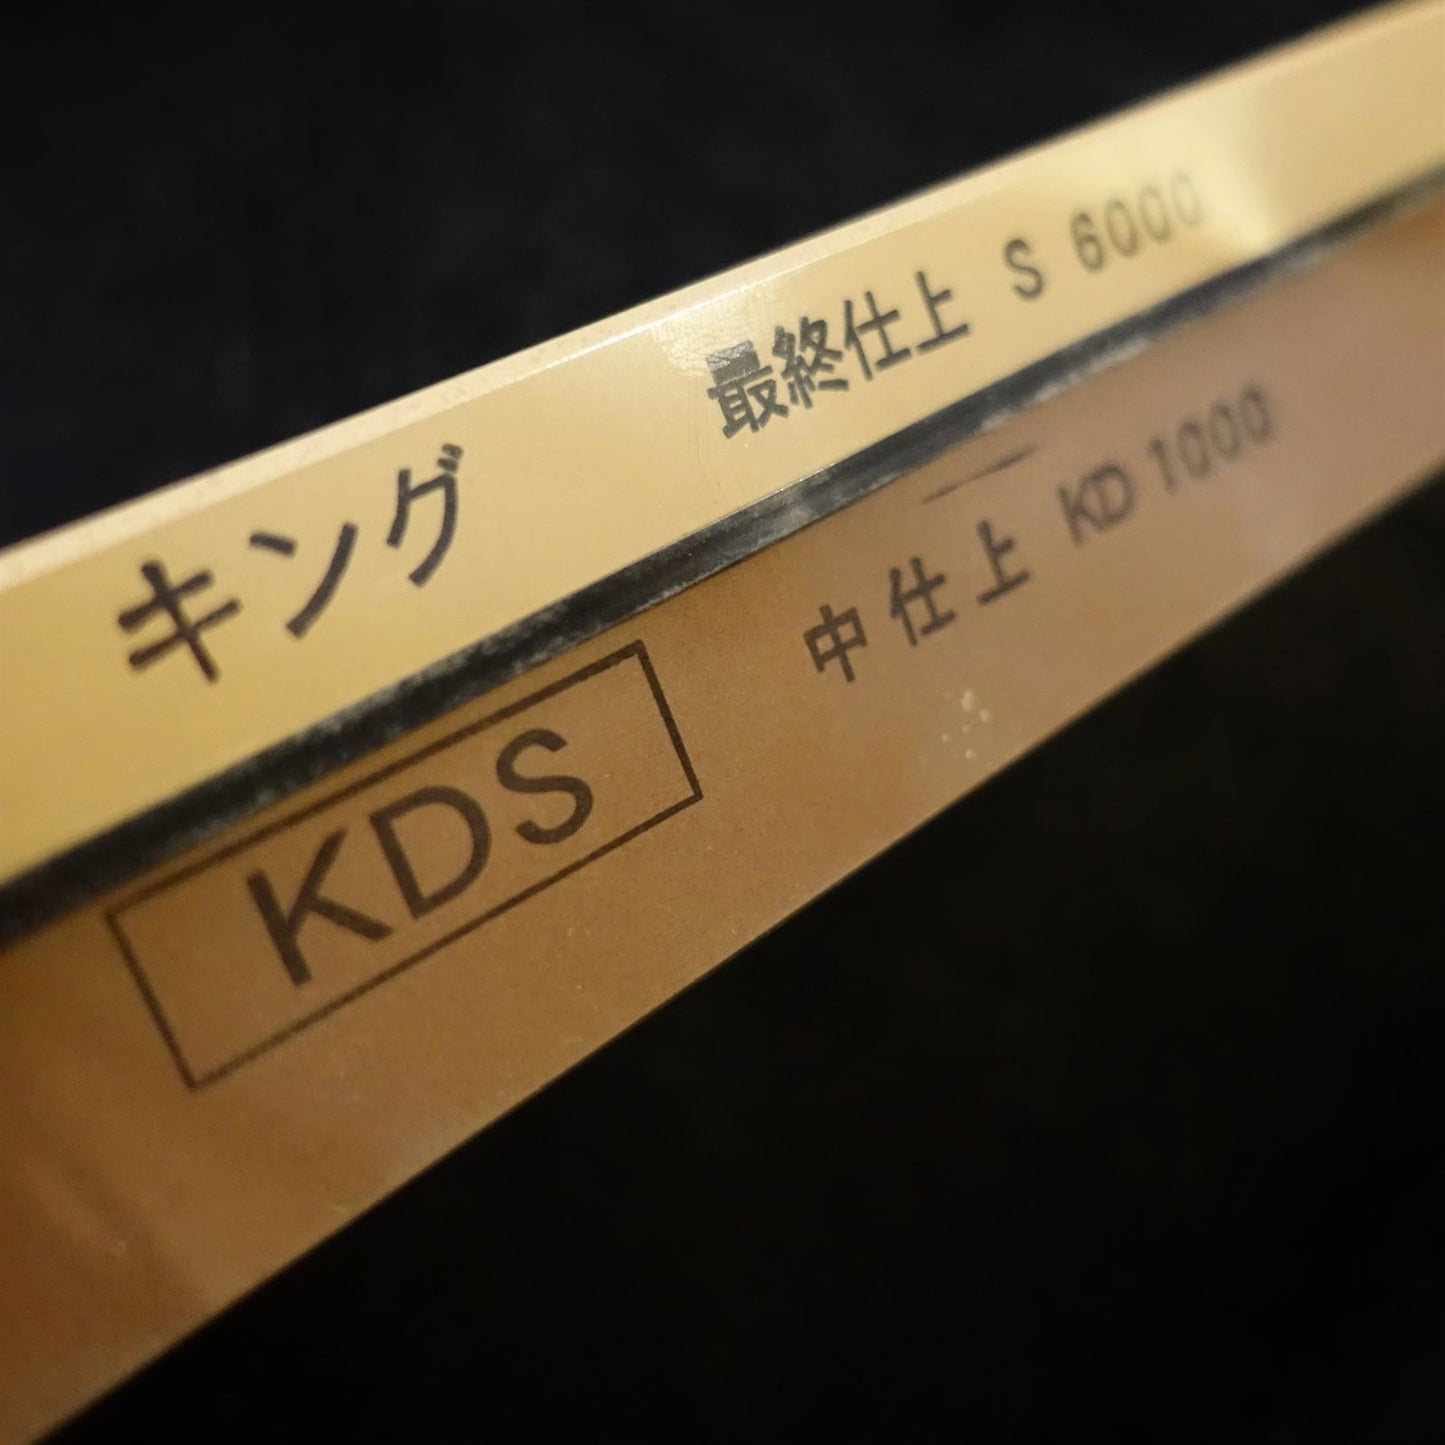 King KDS 1000/6000 - Zahocho Japanese Knives